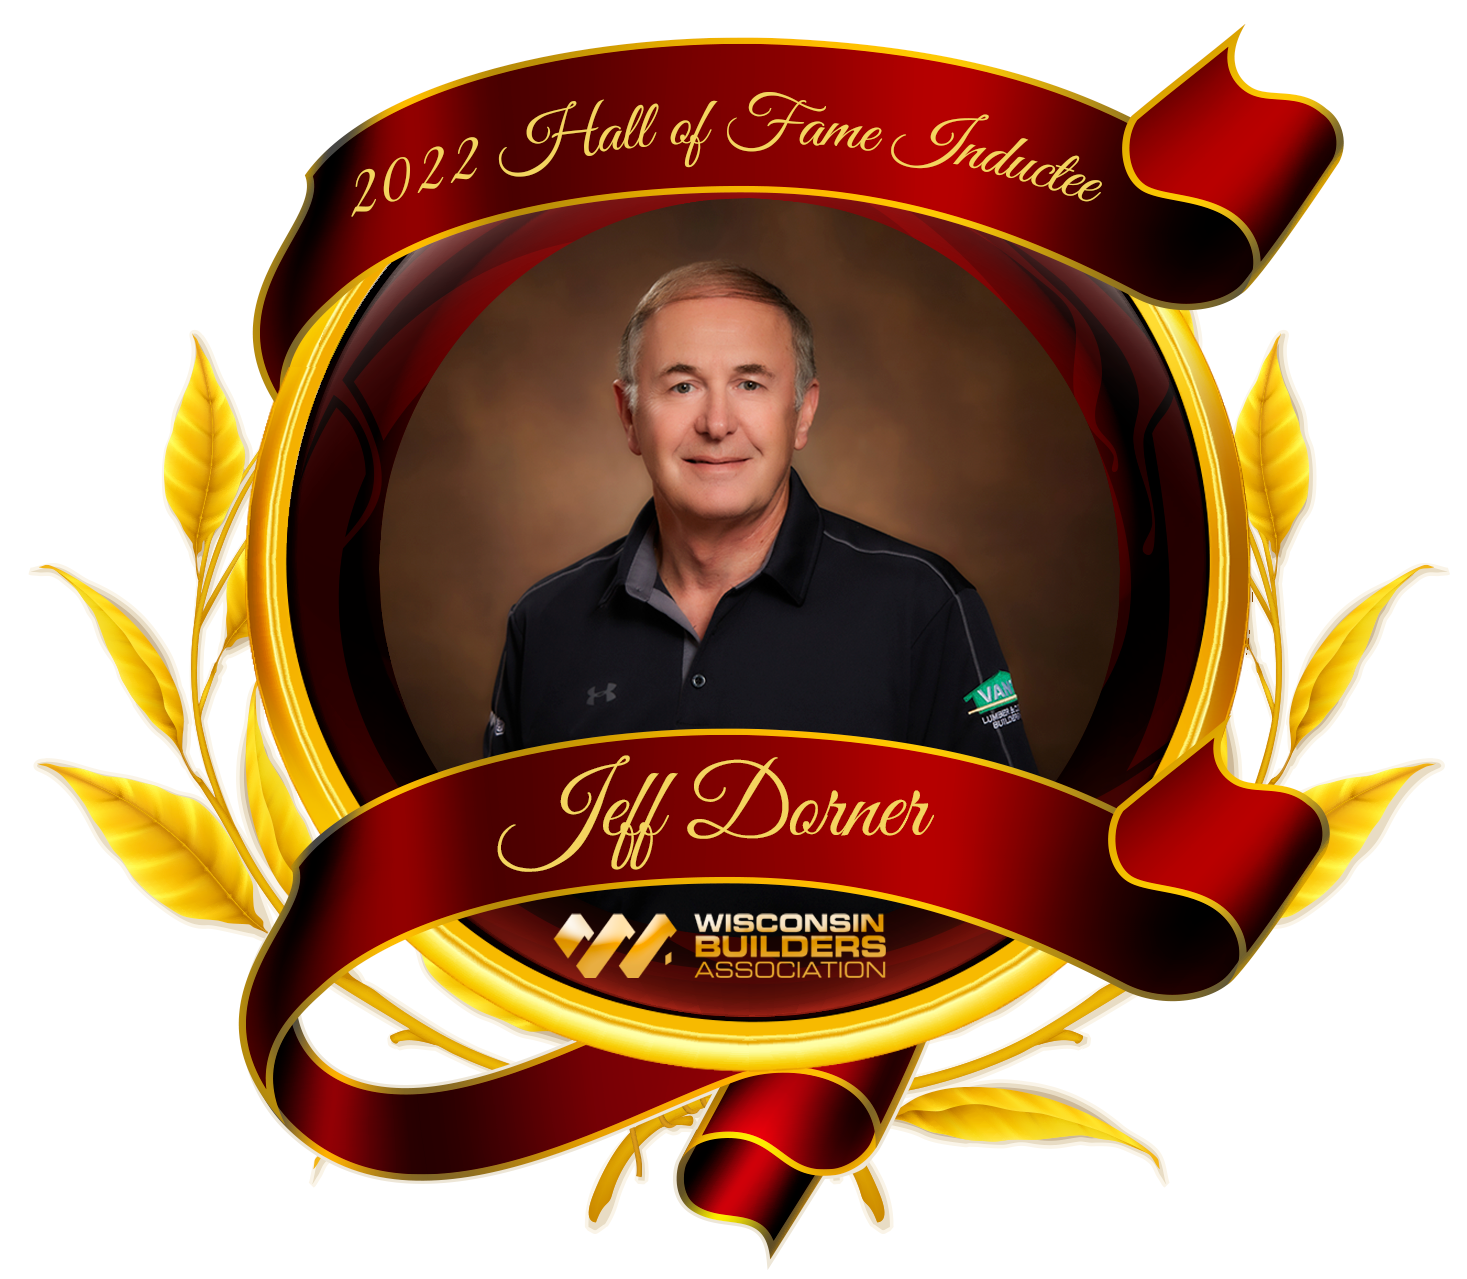 Jeff Dorner, 2022 WBA Hall of Fame Inductee